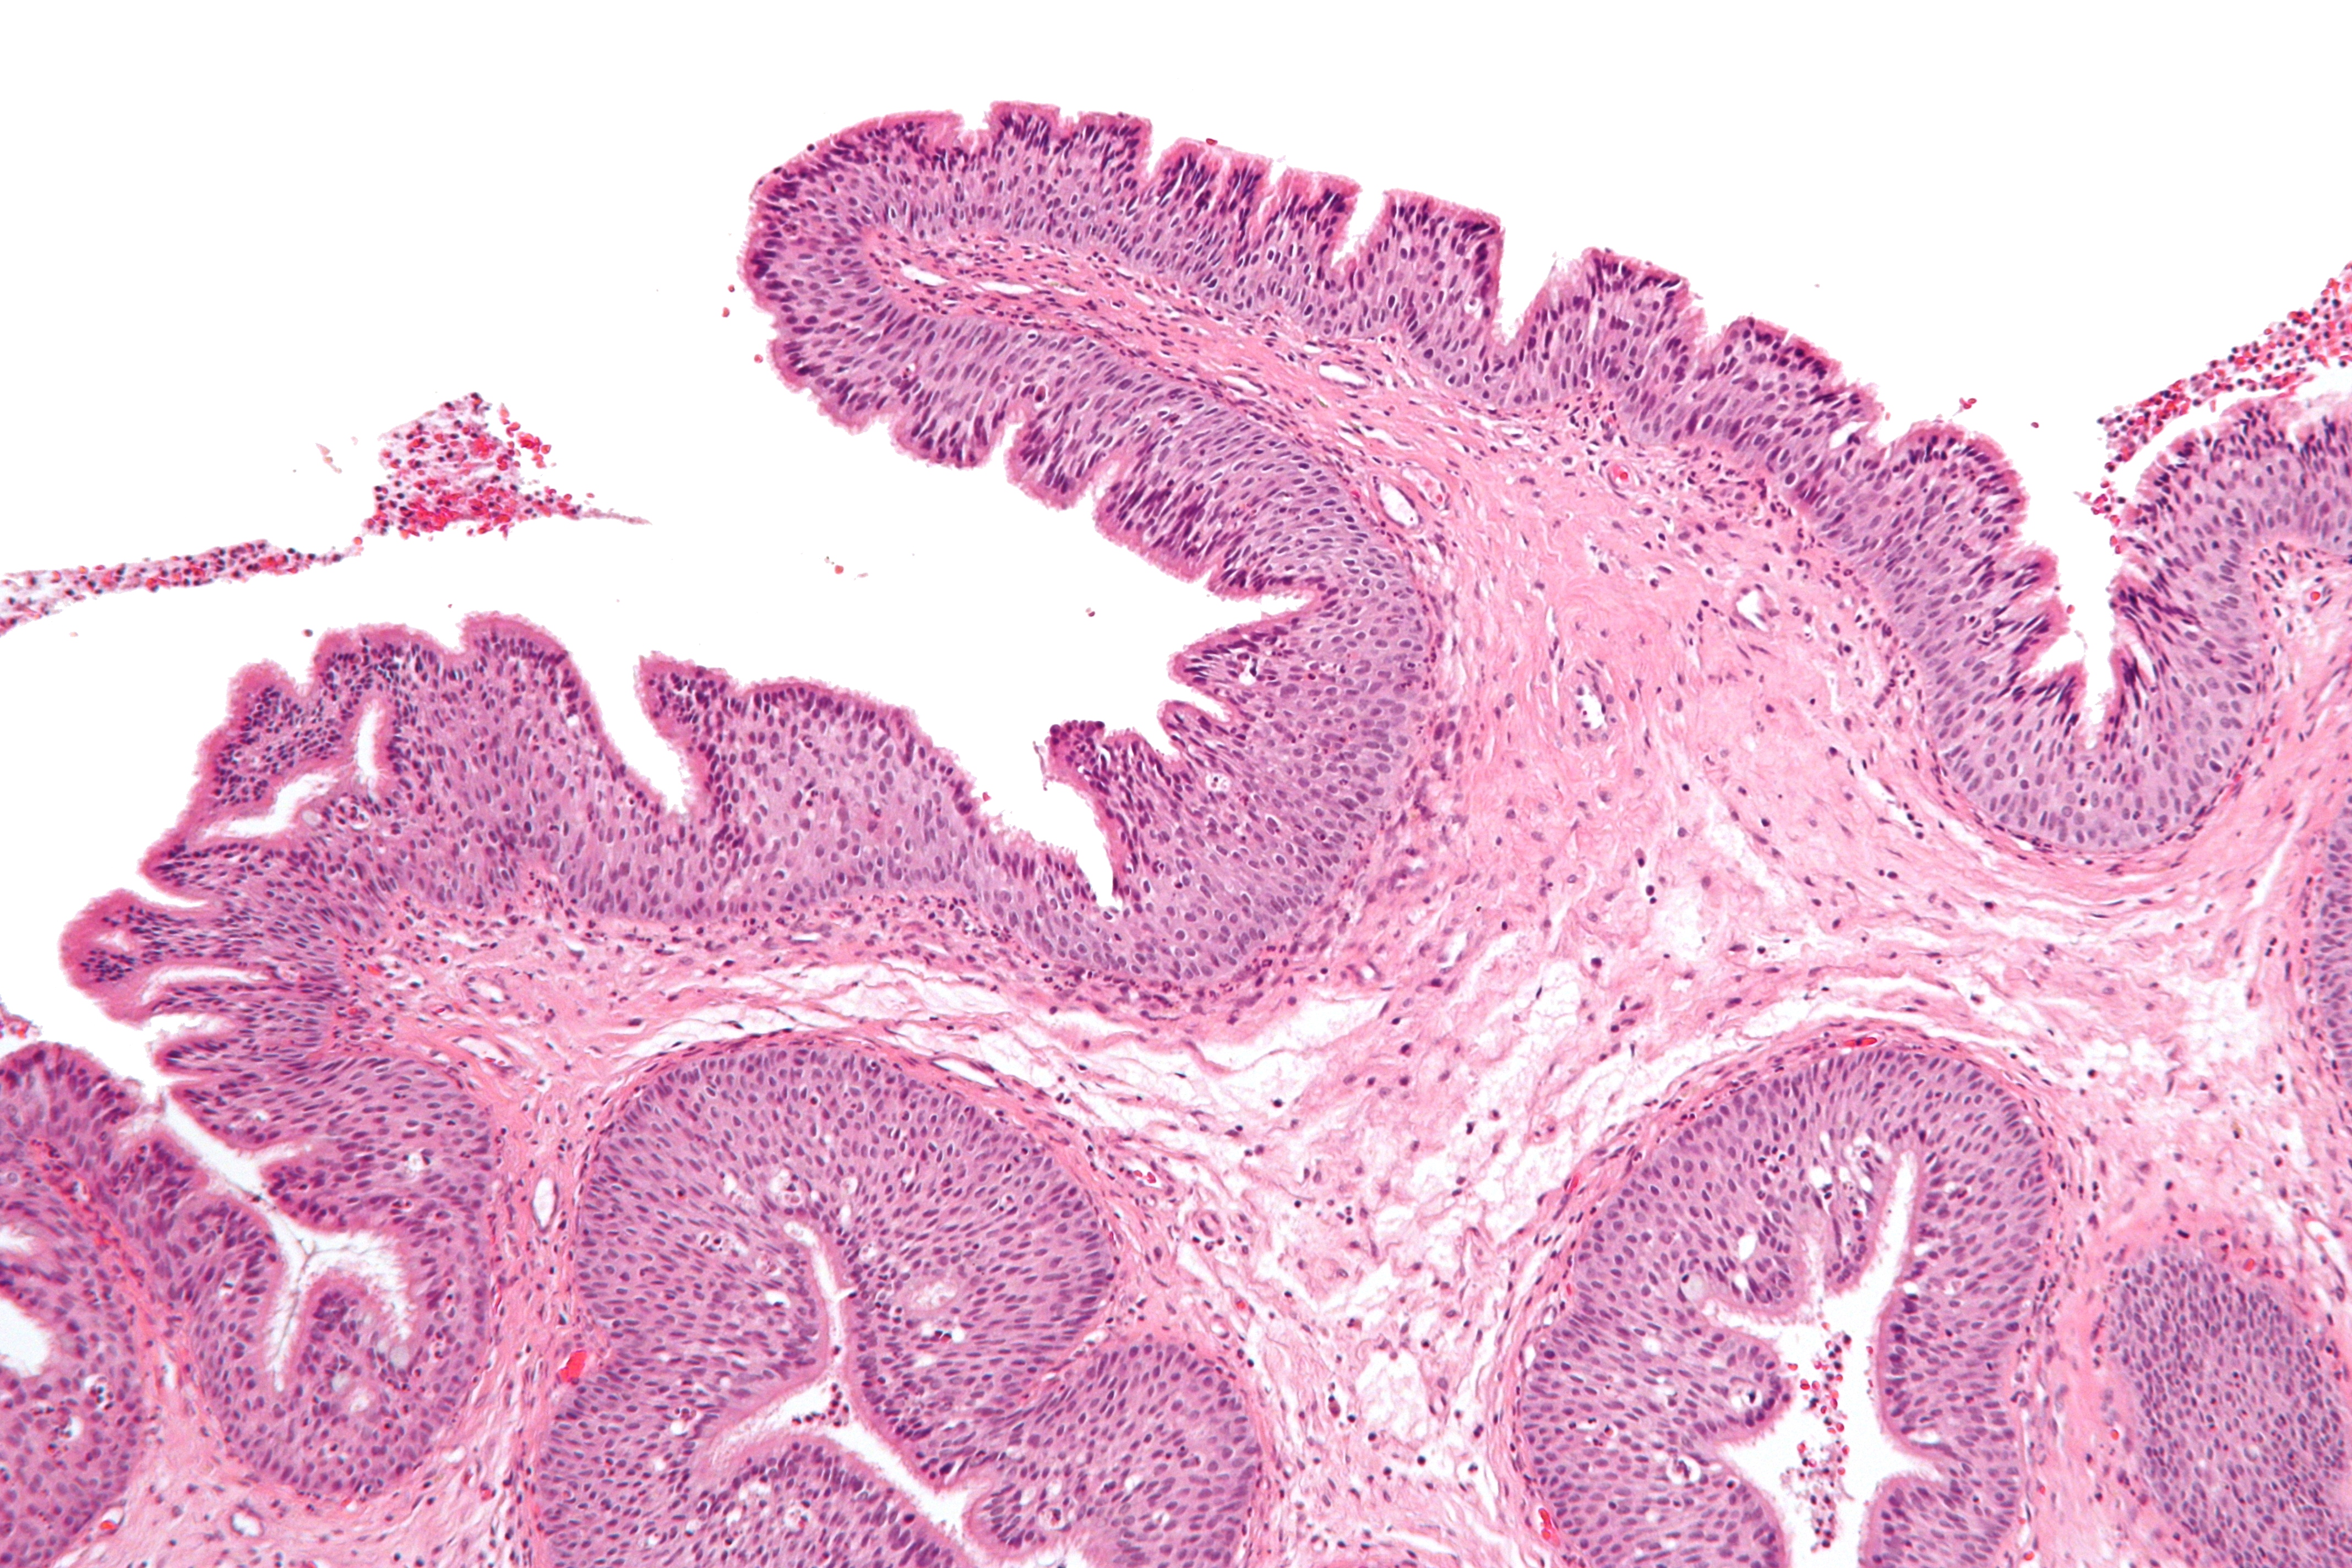 sinonasal inverted papilloma pathology